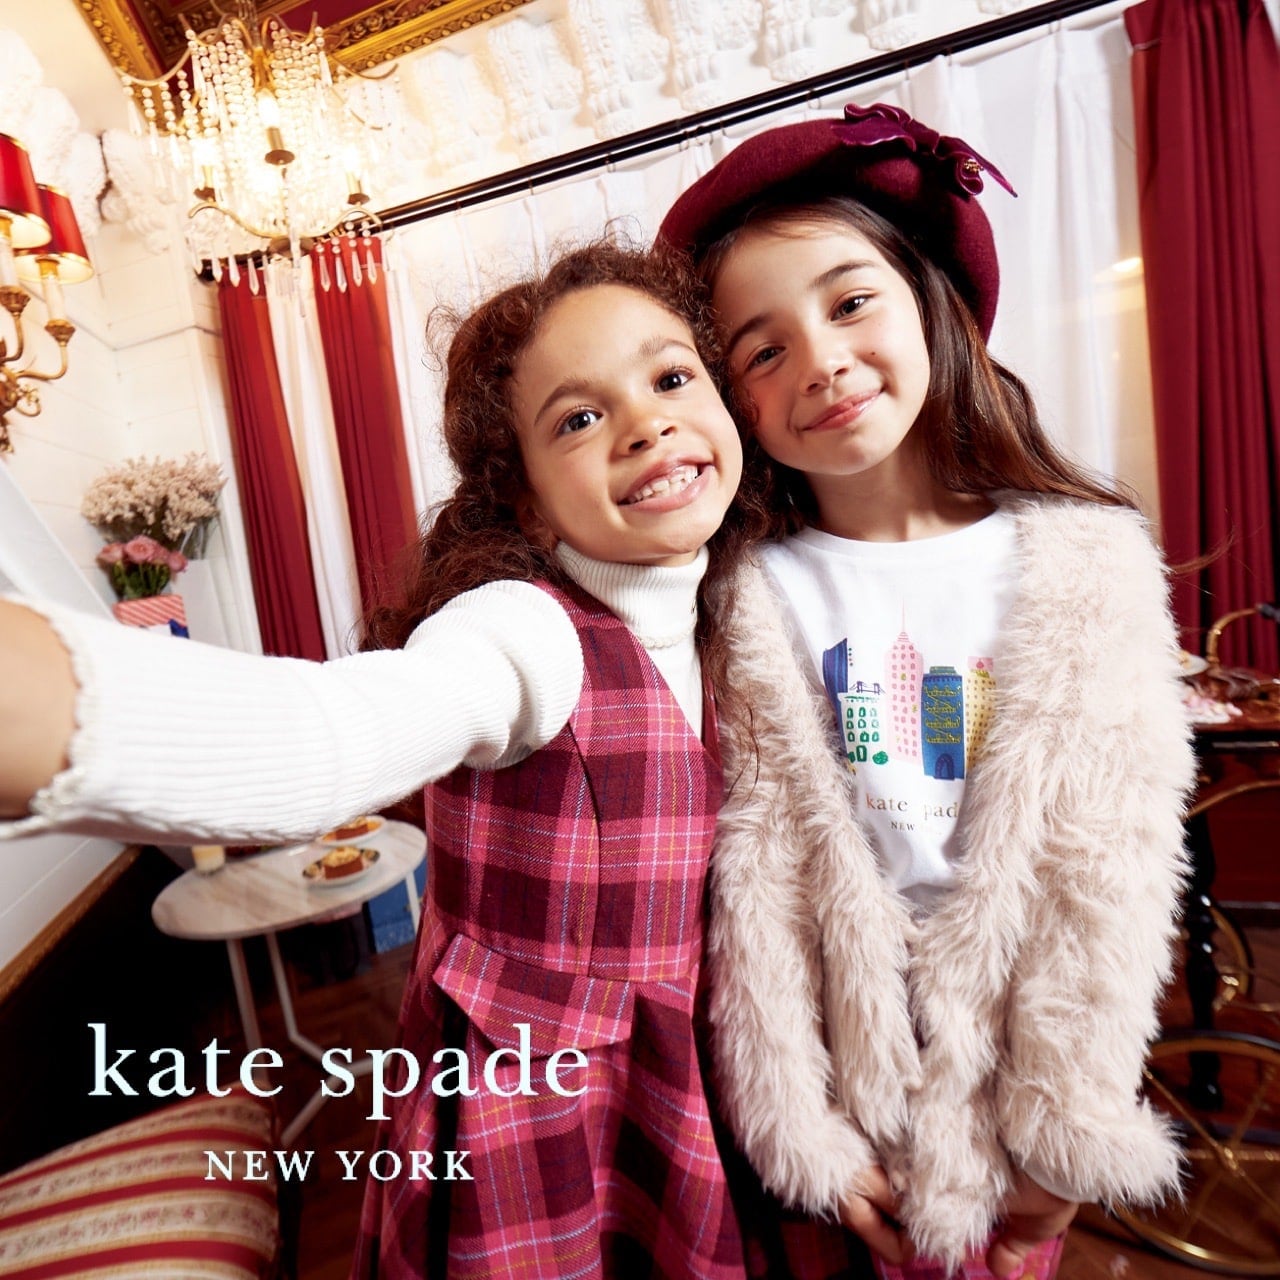 kate spade new york childrenswear(ケイト・スペード ニューヨーク チルドレンウェア)公式通販サイト |  NARUMIYA ONLINE | ナルミヤオンライン